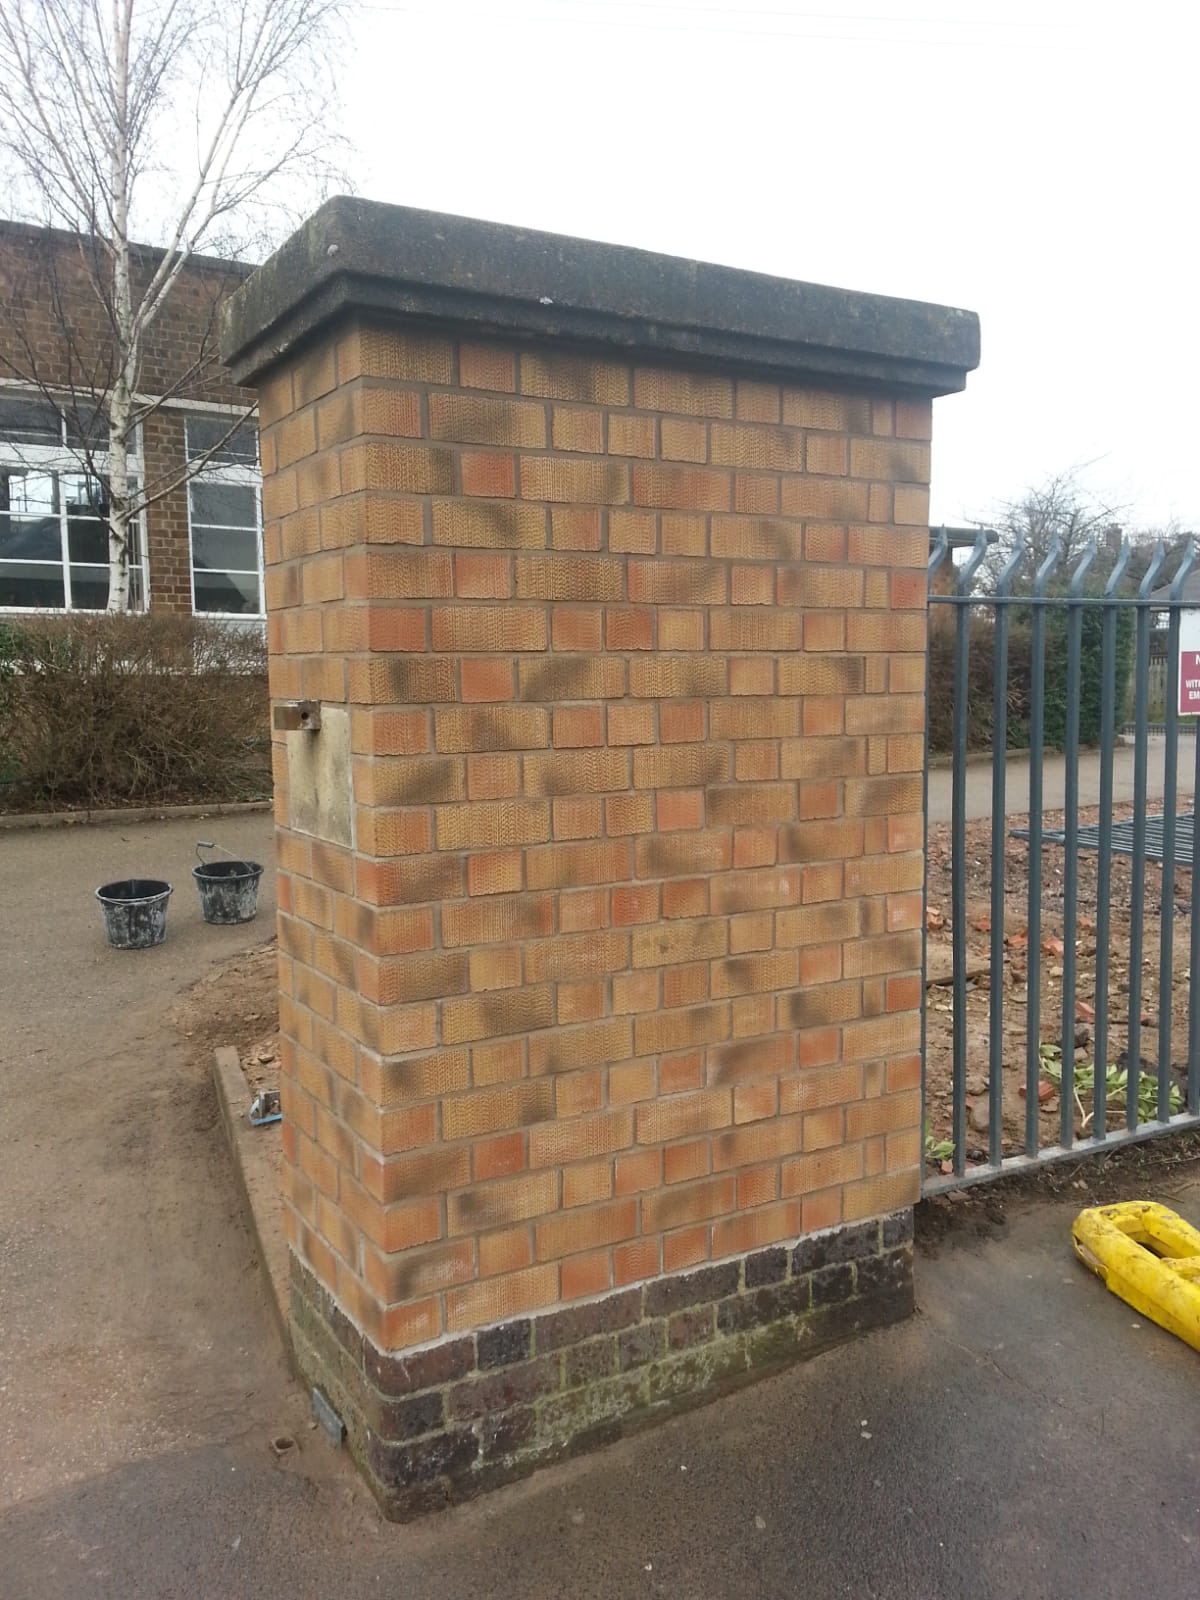 Rebuilt brick pillar